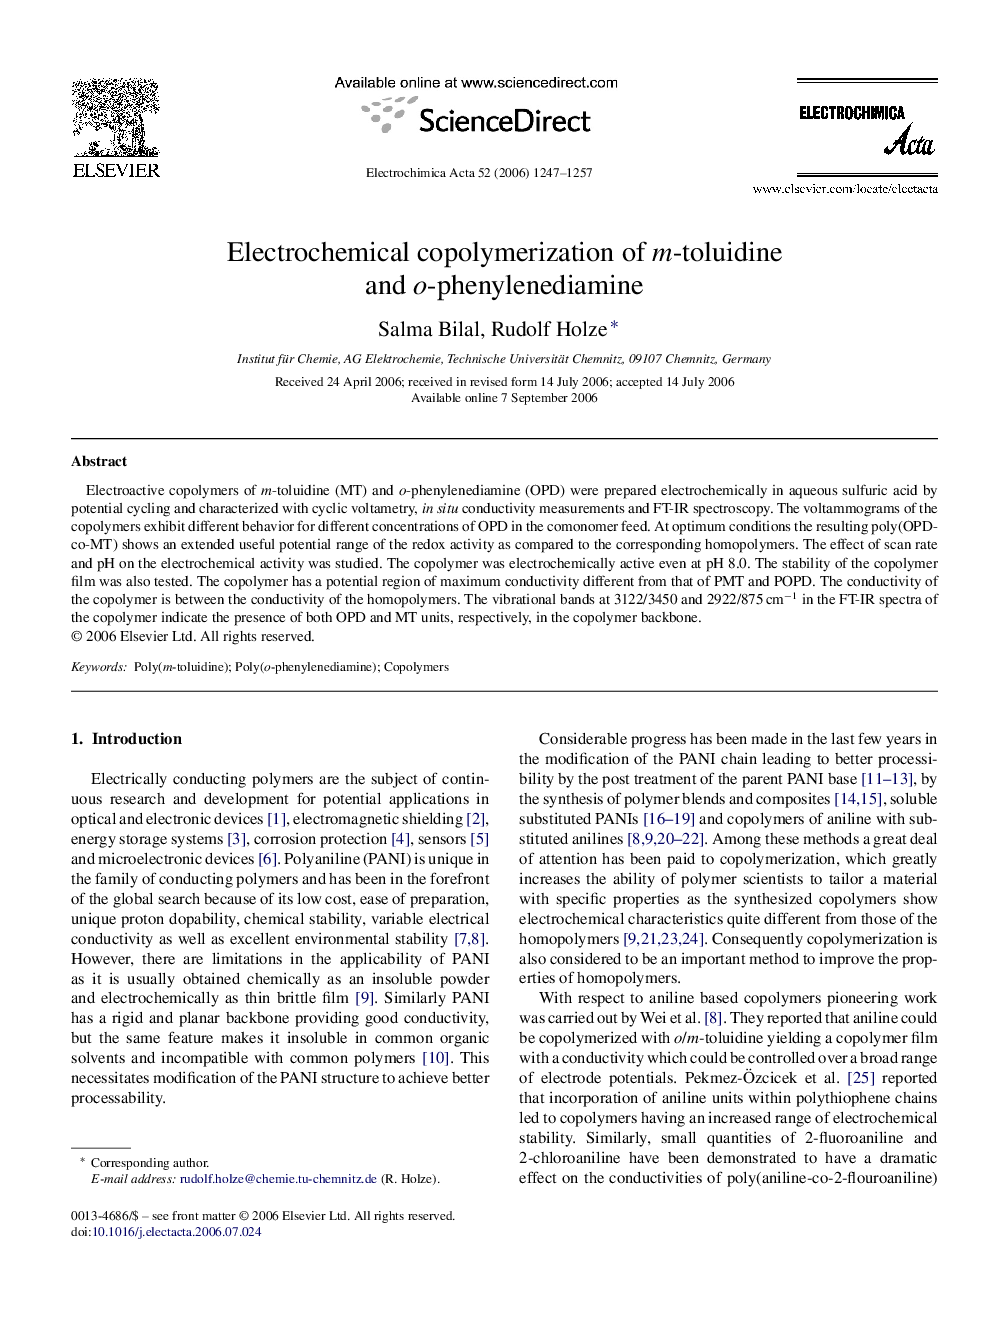 Electrochemical copolymerization of m-toluidine and o-phenylenediamine